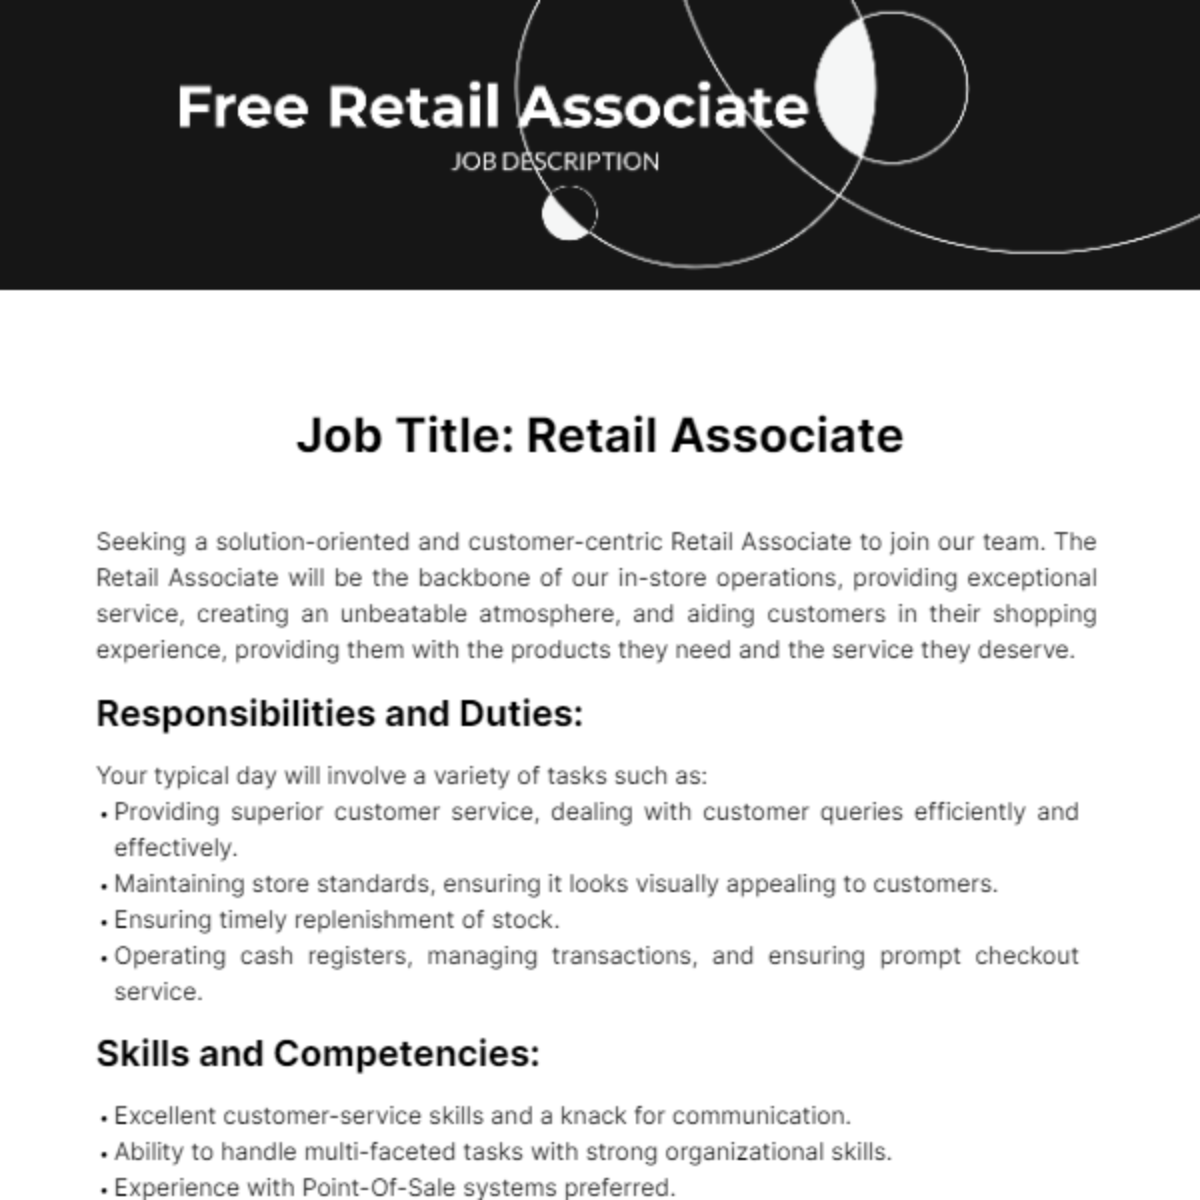 Free Retail Associate Job Description Template